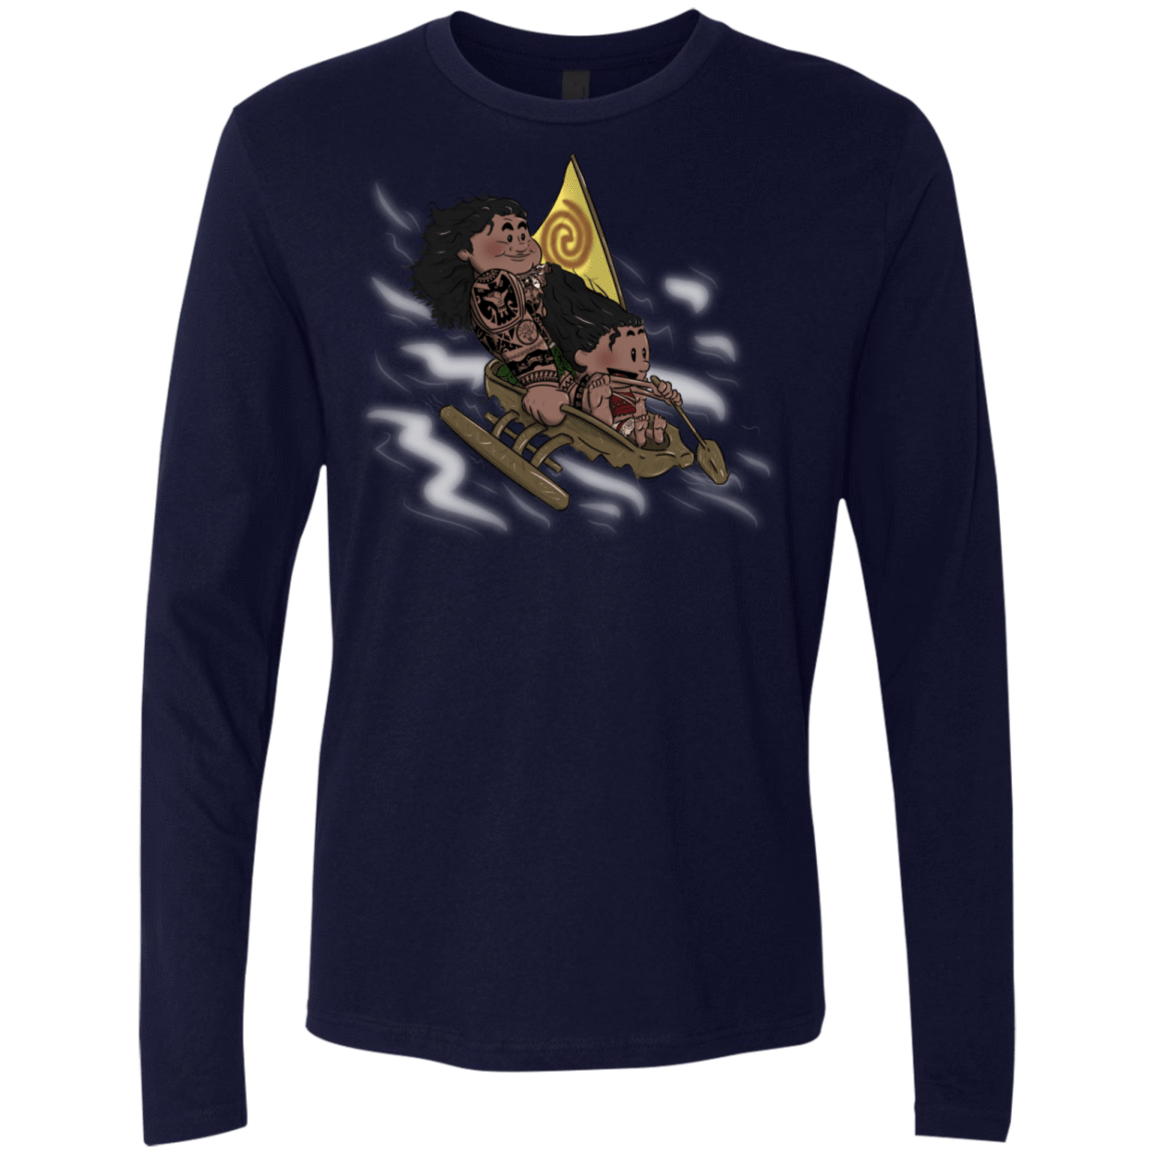 T-Shirts Midnight Navy / S Cross to The Ocean Men's Premium Long Sleeve